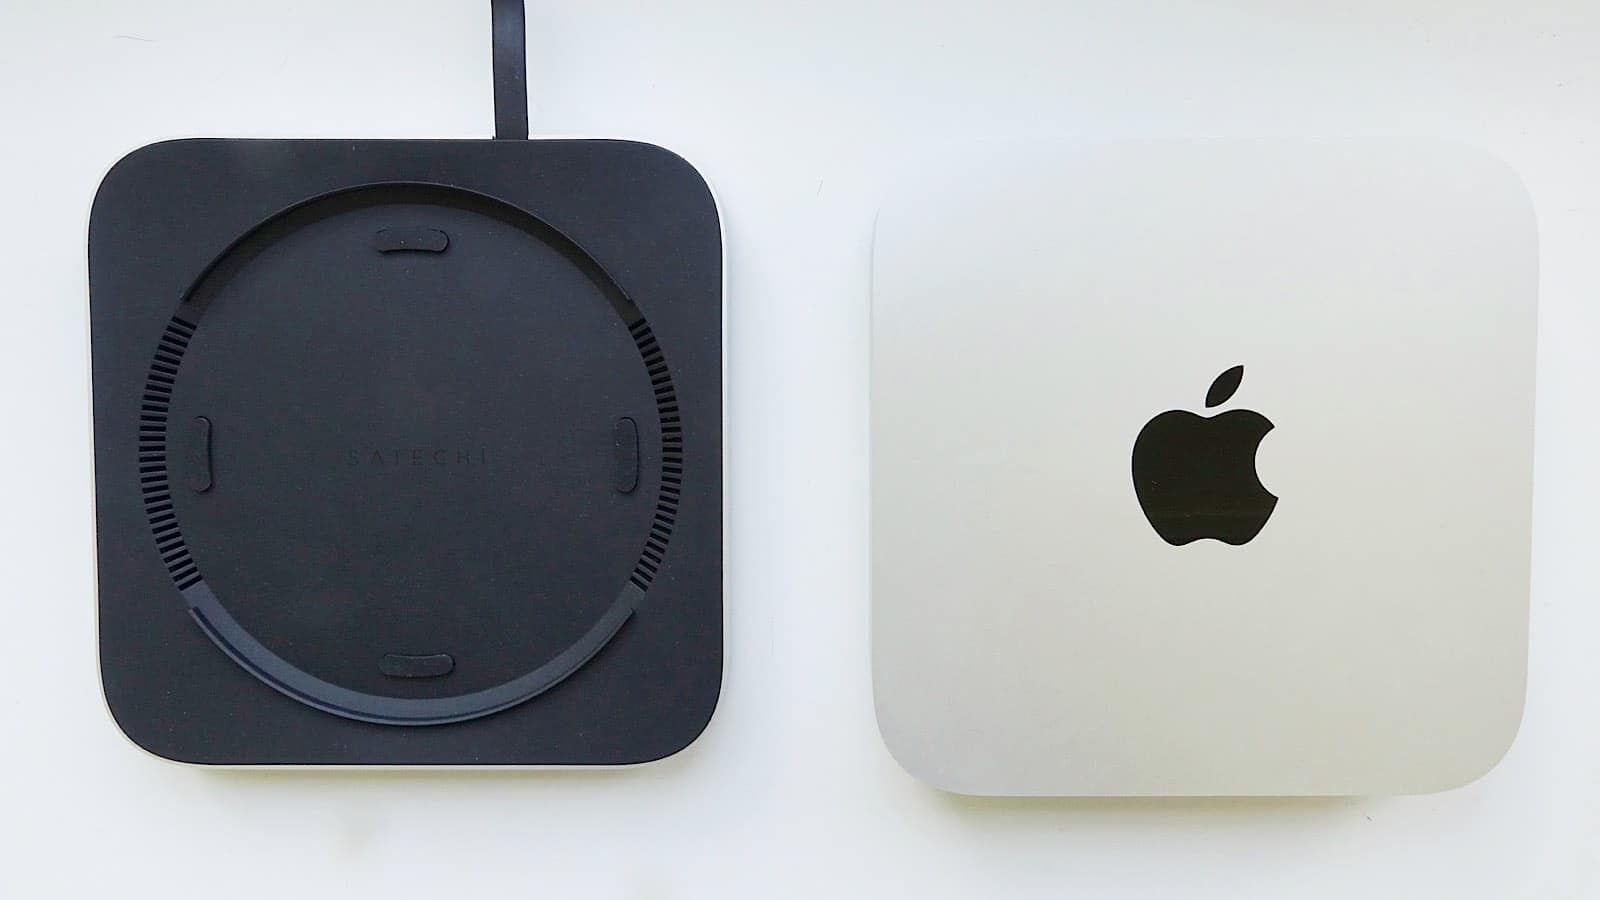 The Satechi Mac Mini Stand (left) next to the Mac Mini (right)